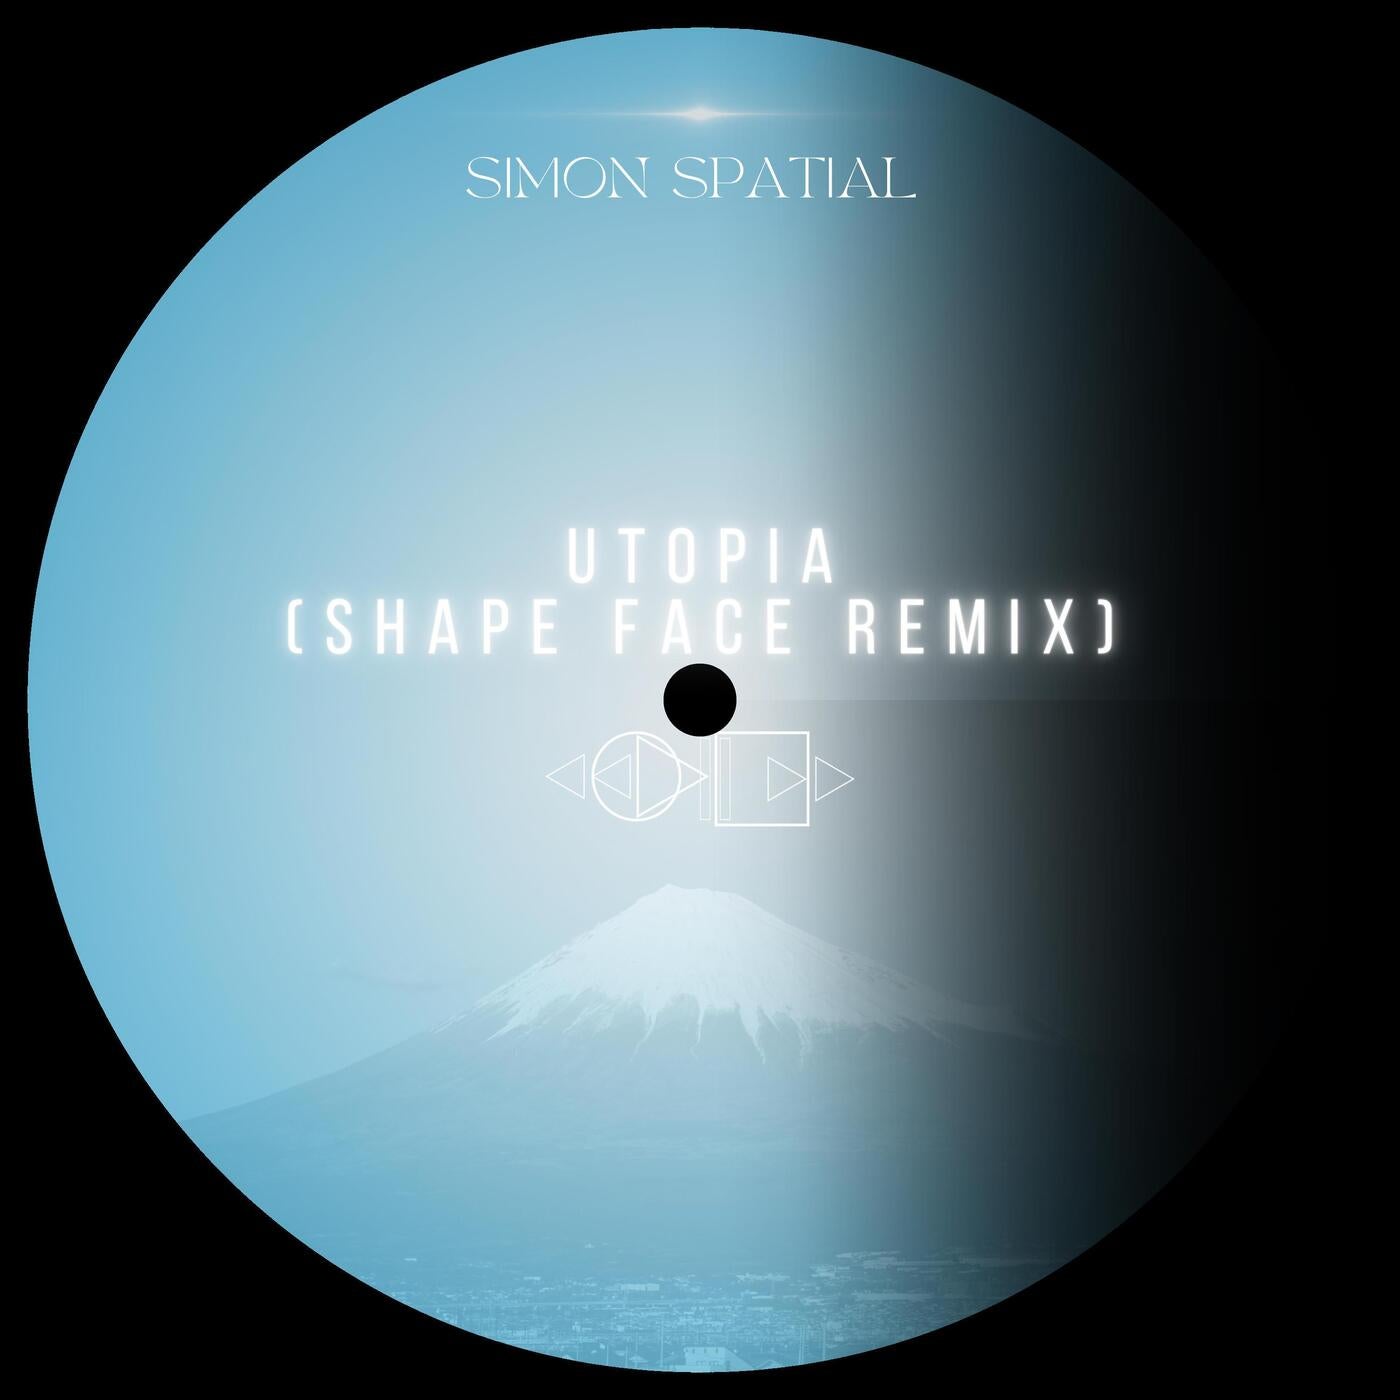 Utopia (Shape Face Remix)